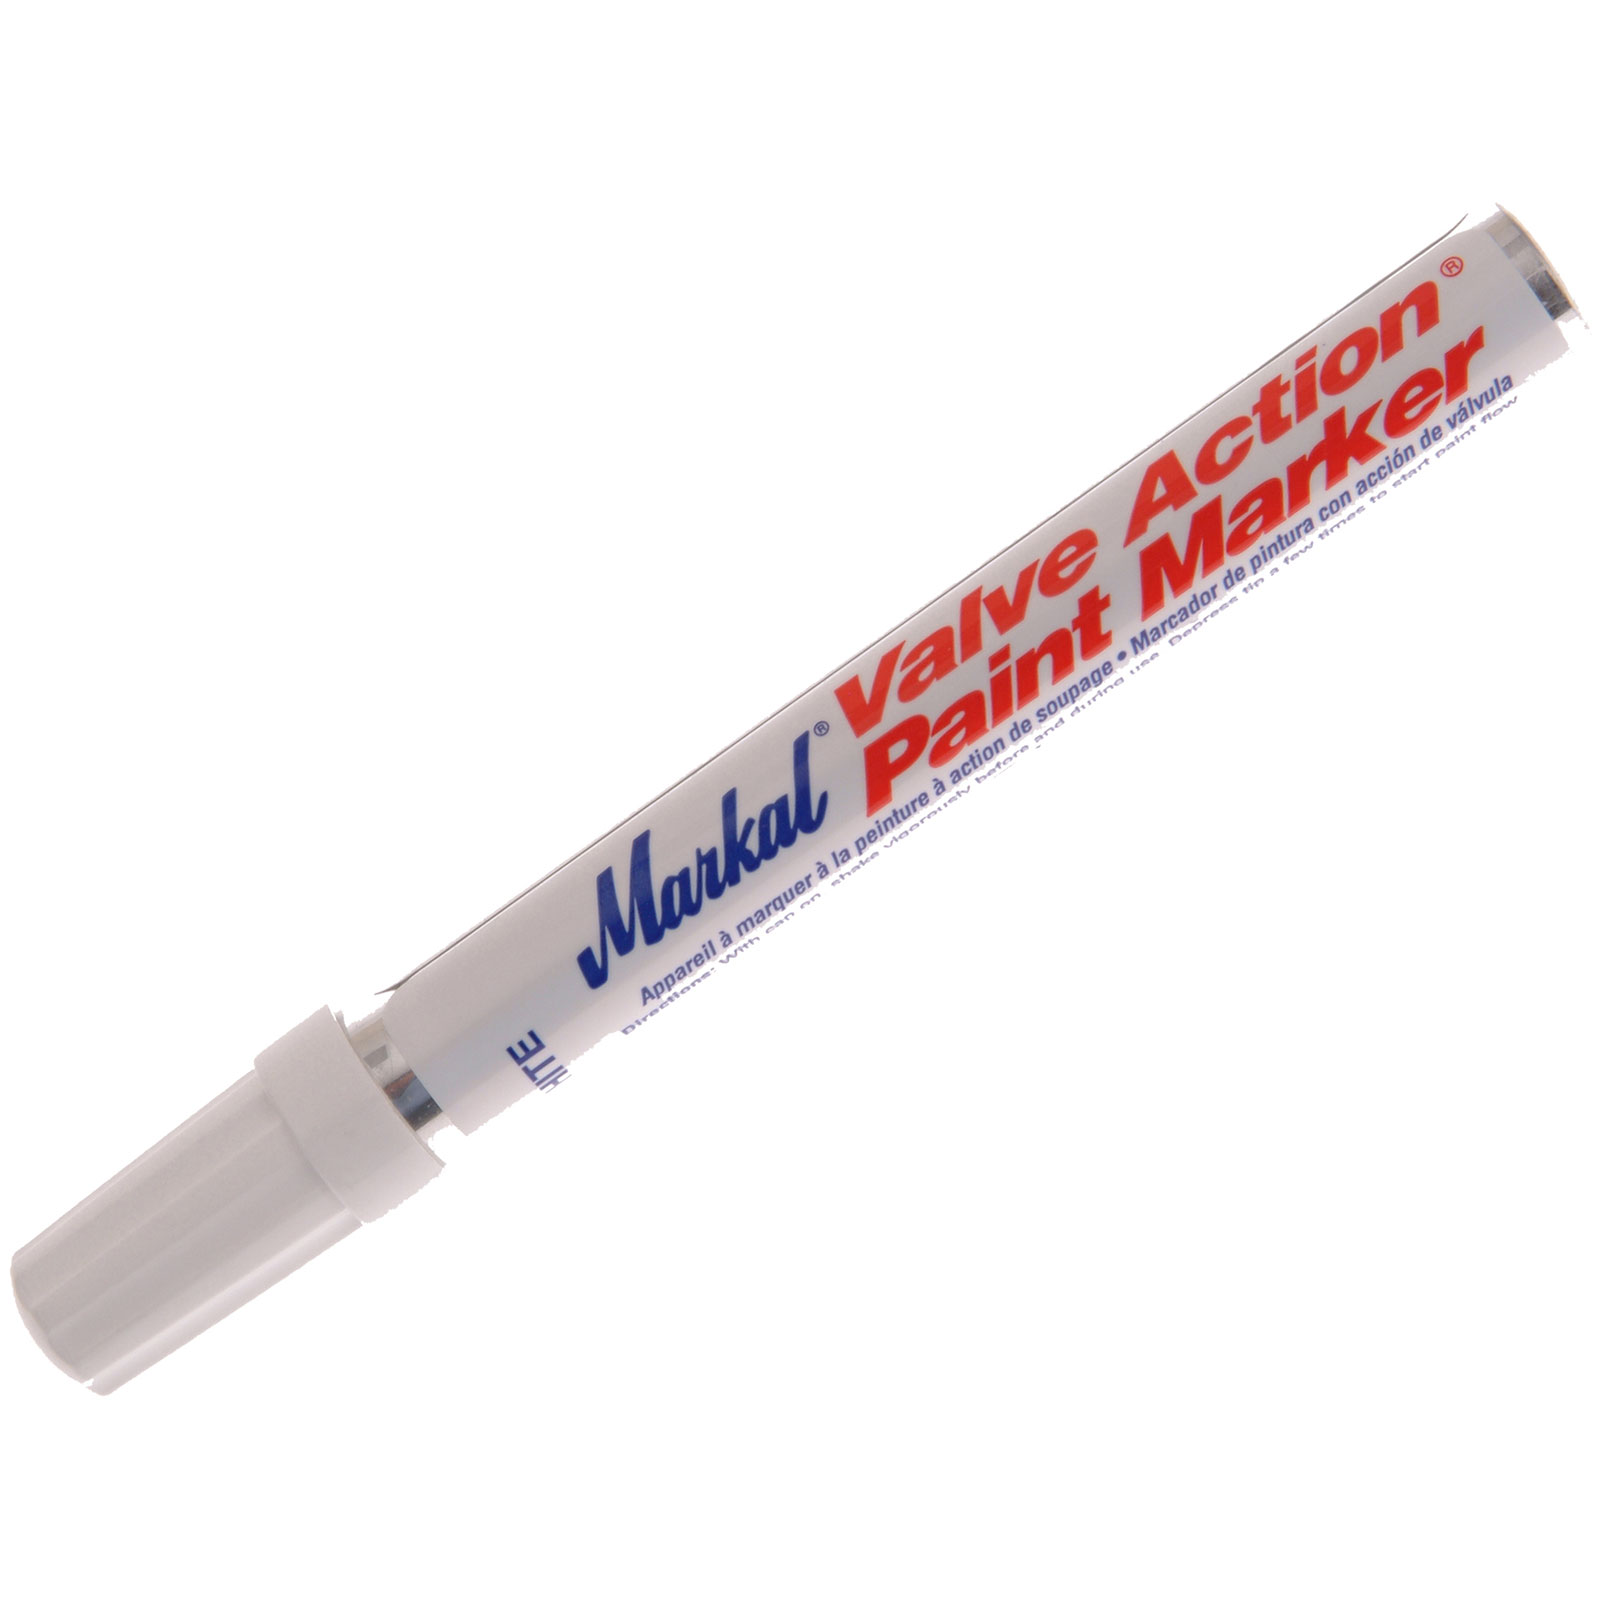 Markal Yellow Valve Action Paint Marker - 42996821, Rubber Inc., B2B Tire  Equipment Distribution - Paint Sticks & Markers - Paint Sticks & Markers  Rubber Inc.